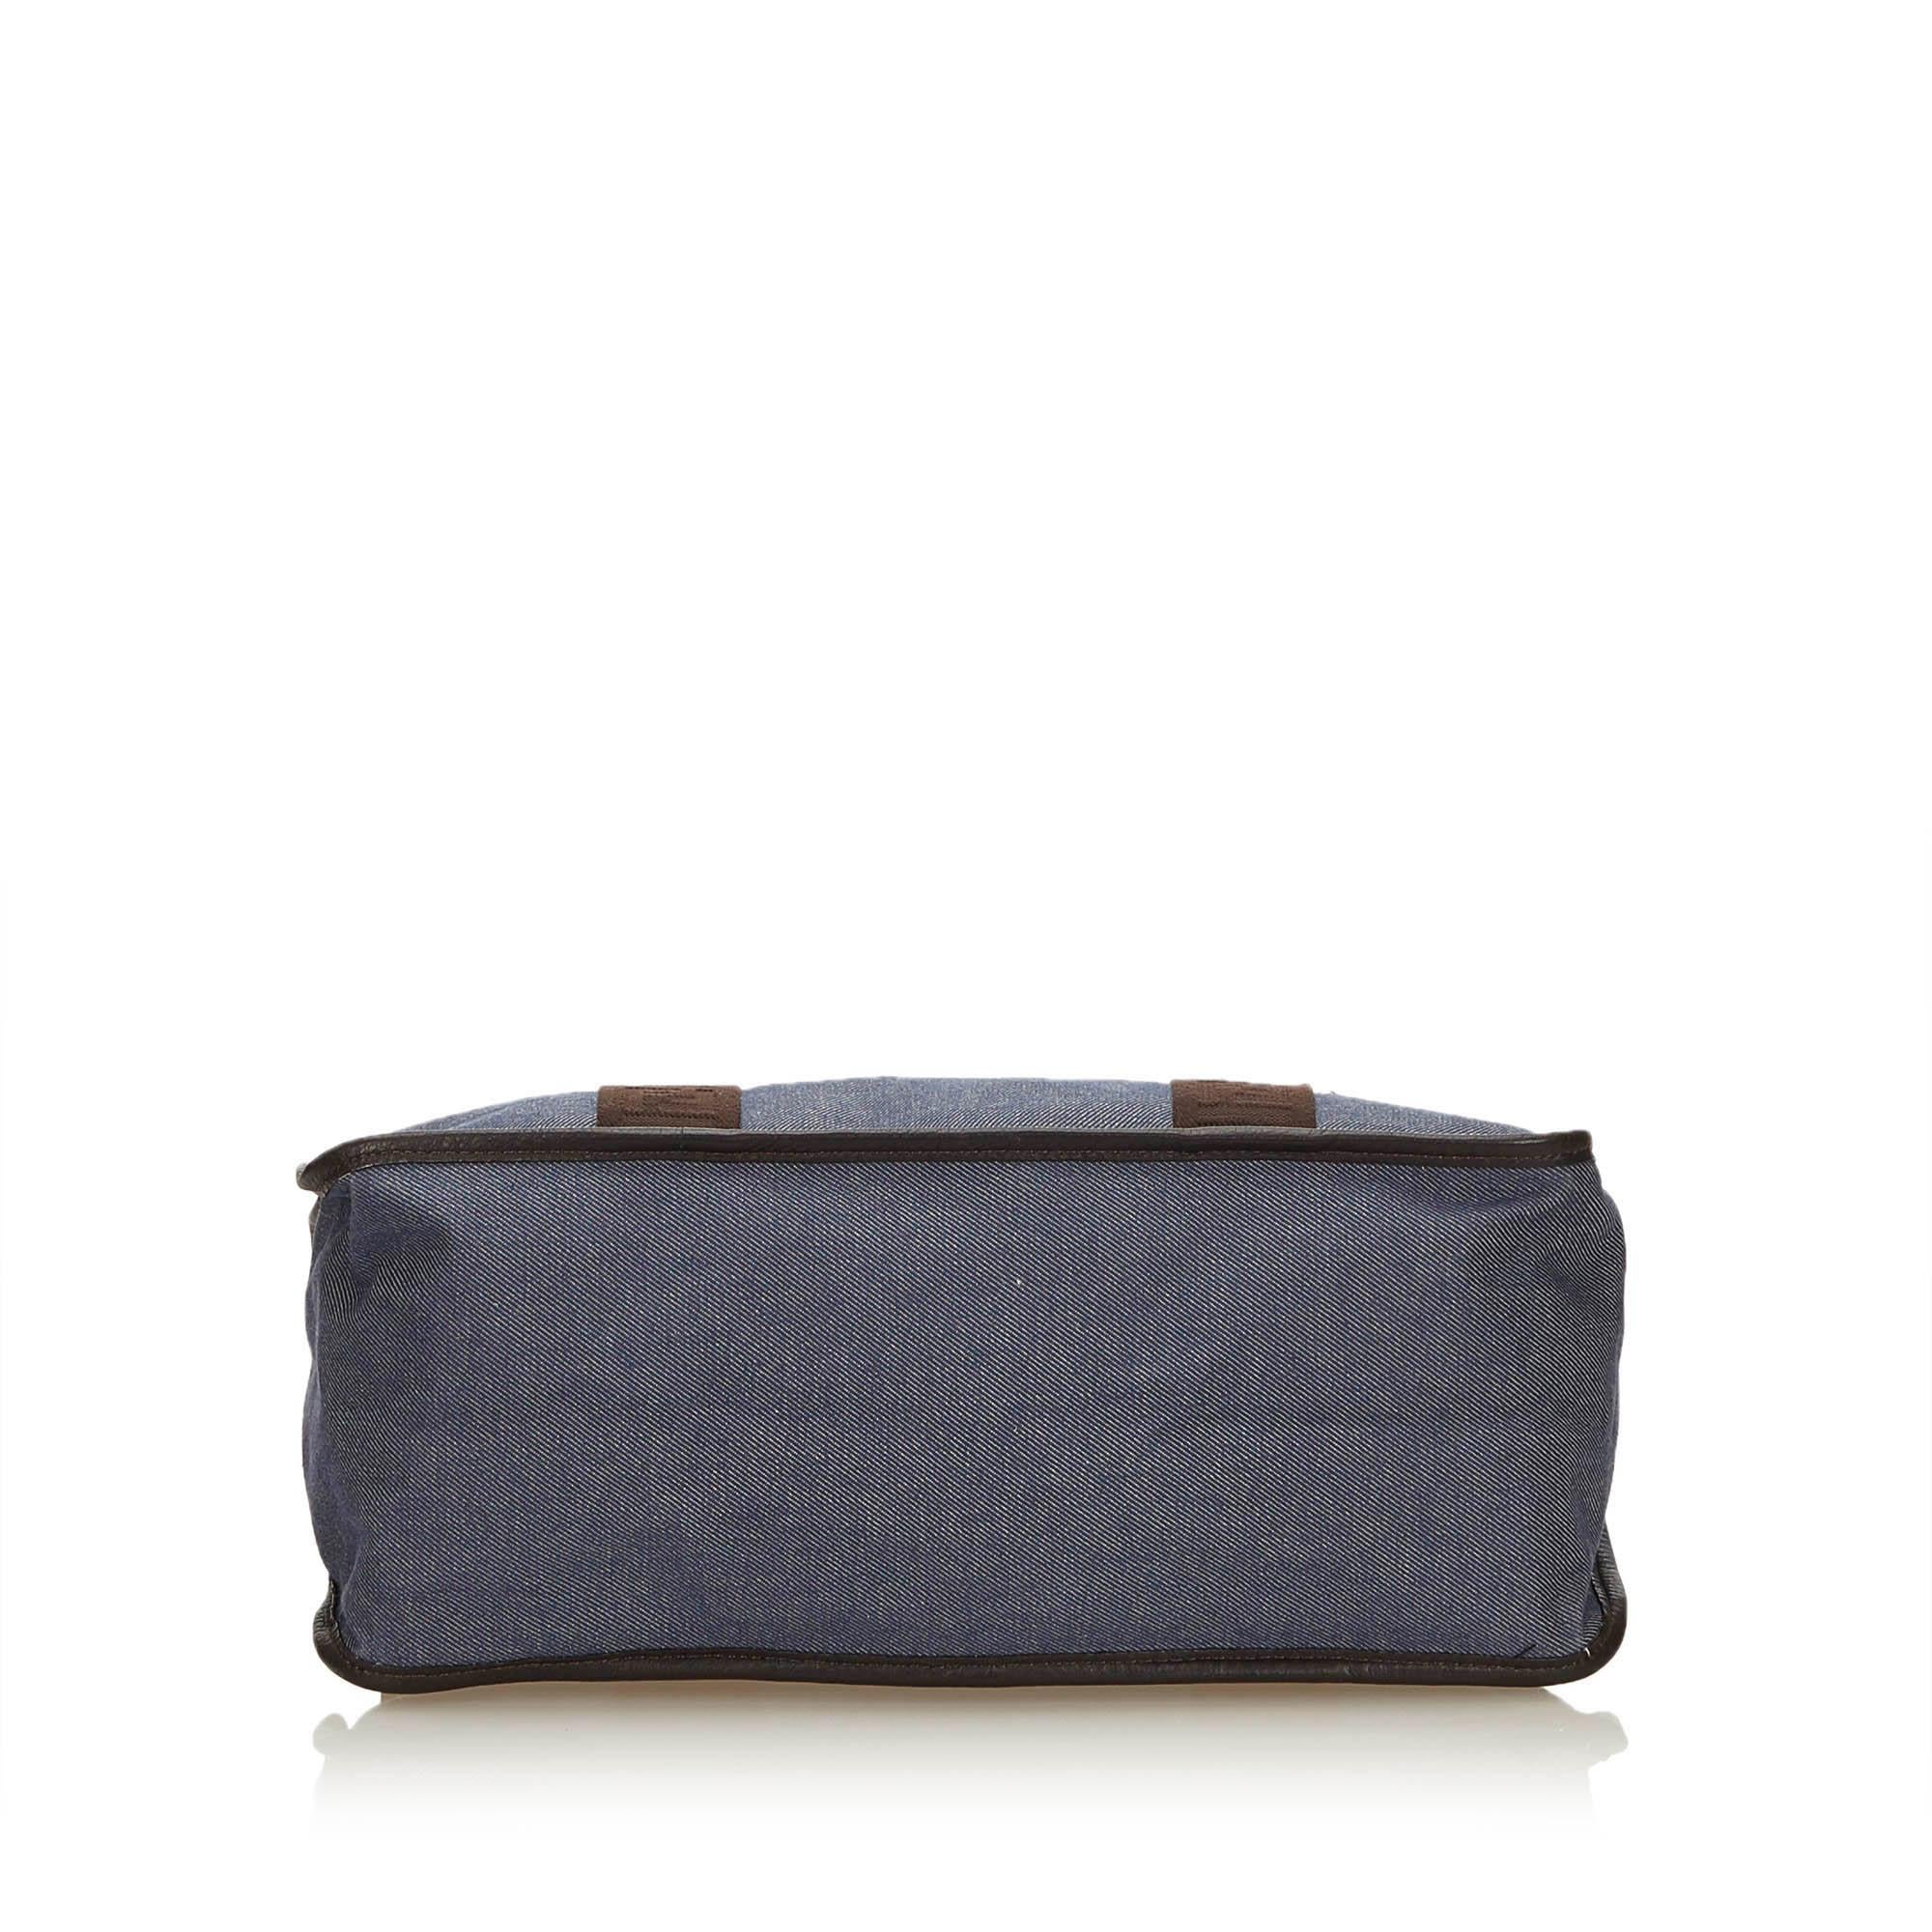 Fendi Blue Jacquard Handbag In Good Condition For Sale In Orlando, FL